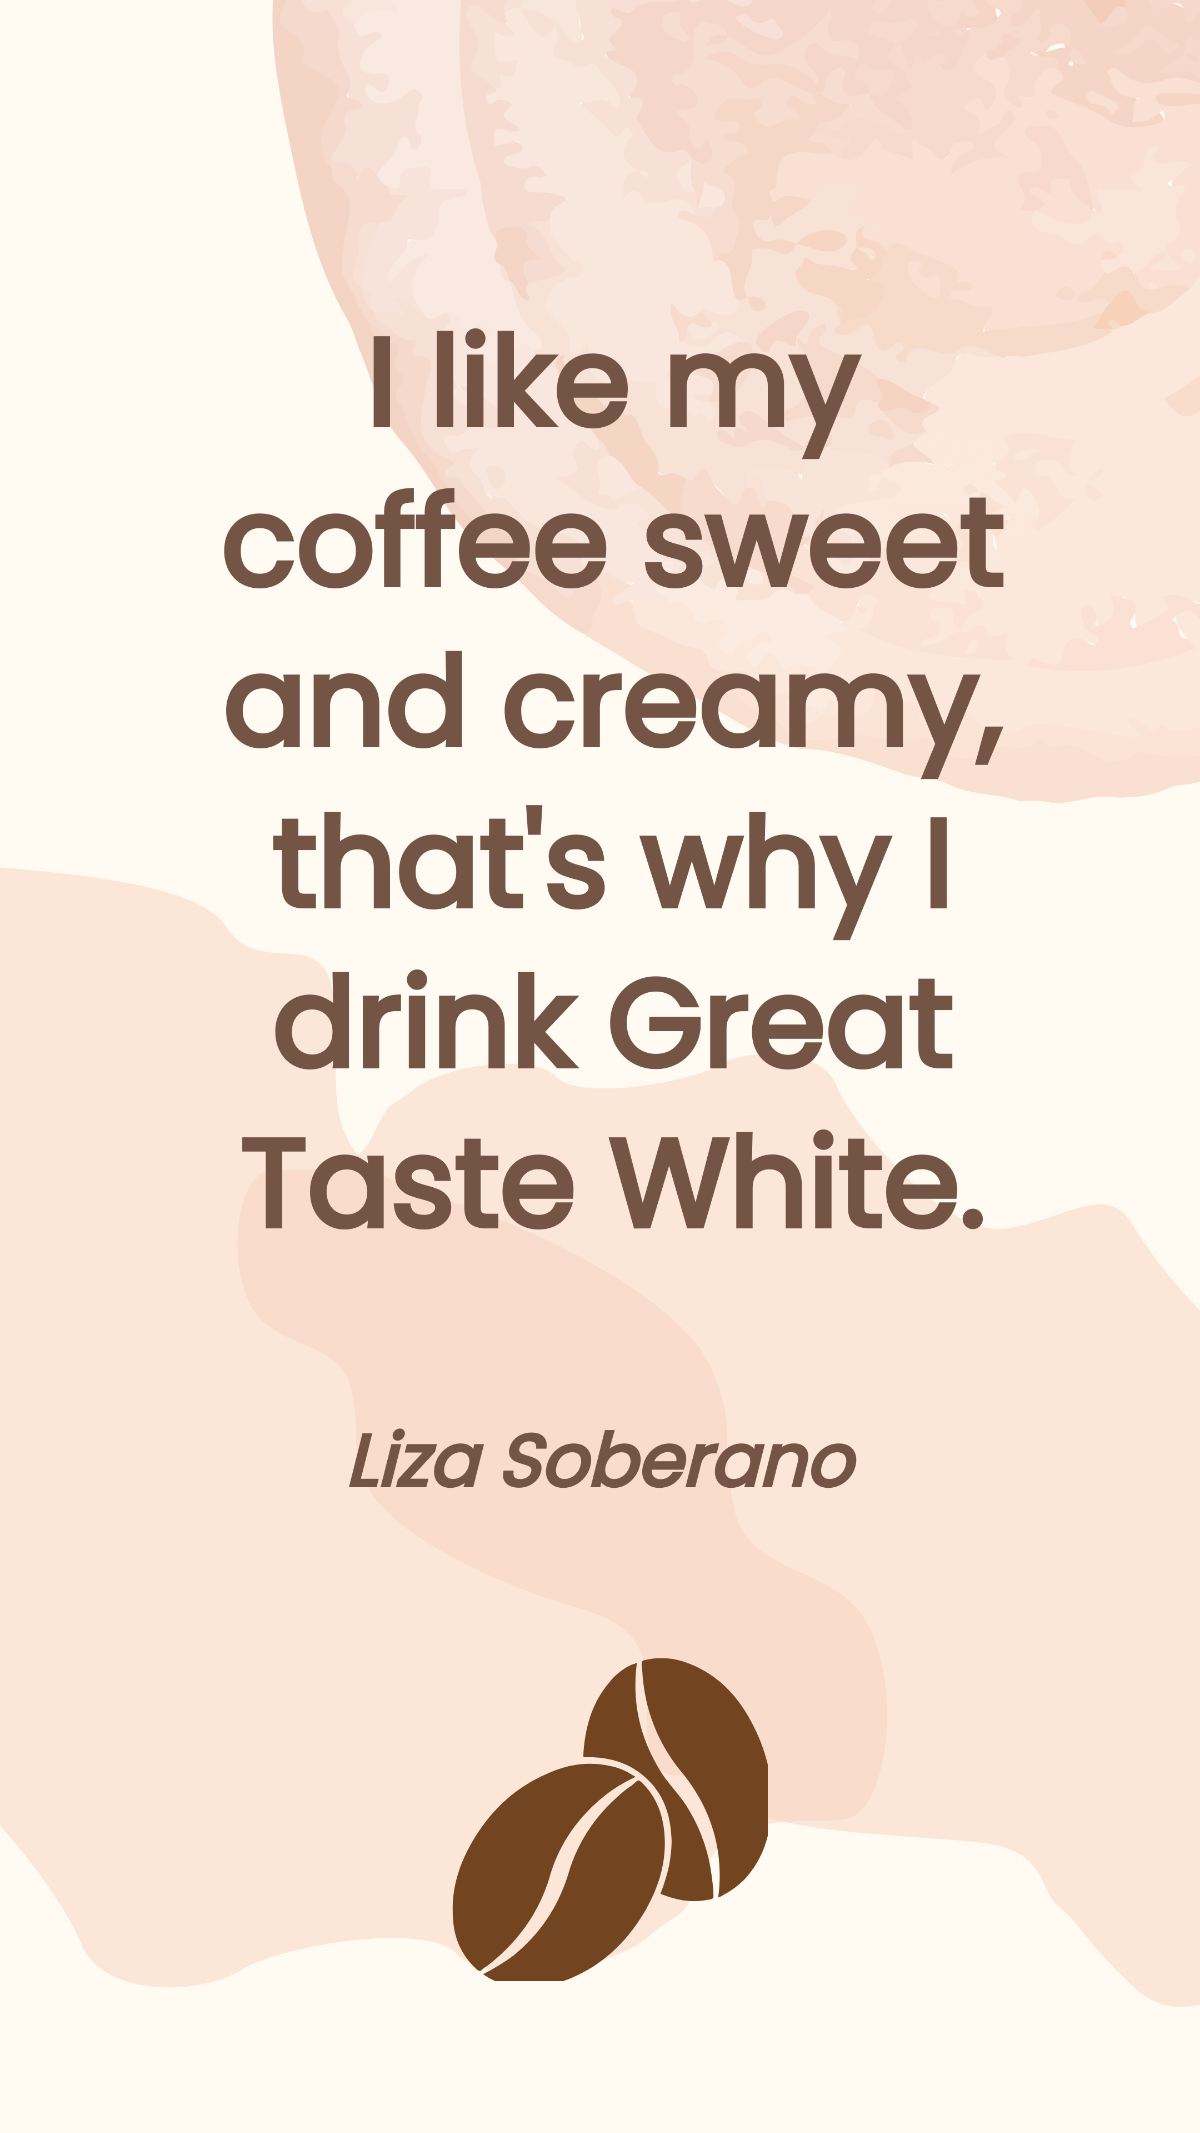 Liza Soberano - I like my coffee sweet and creamy, that's why I drink Great Taste White. Template